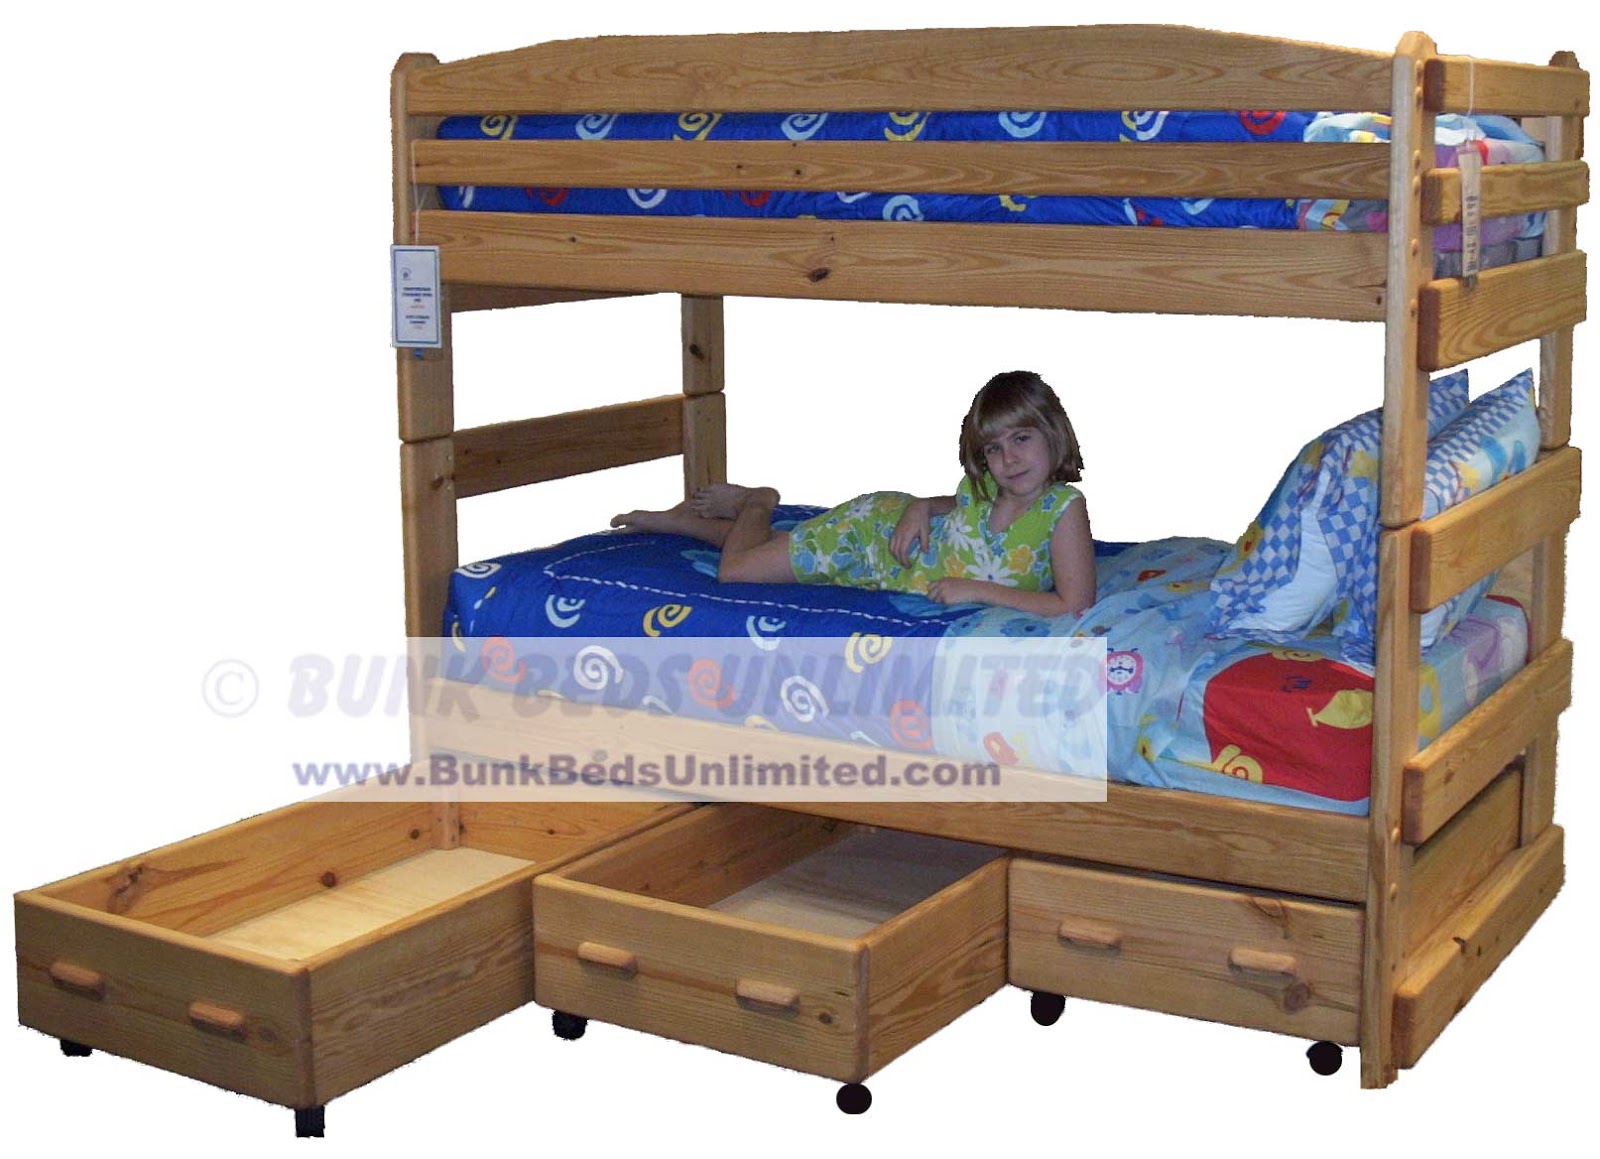 Bunk Beds – we have plans for severaldifferent bunk beds: standard 